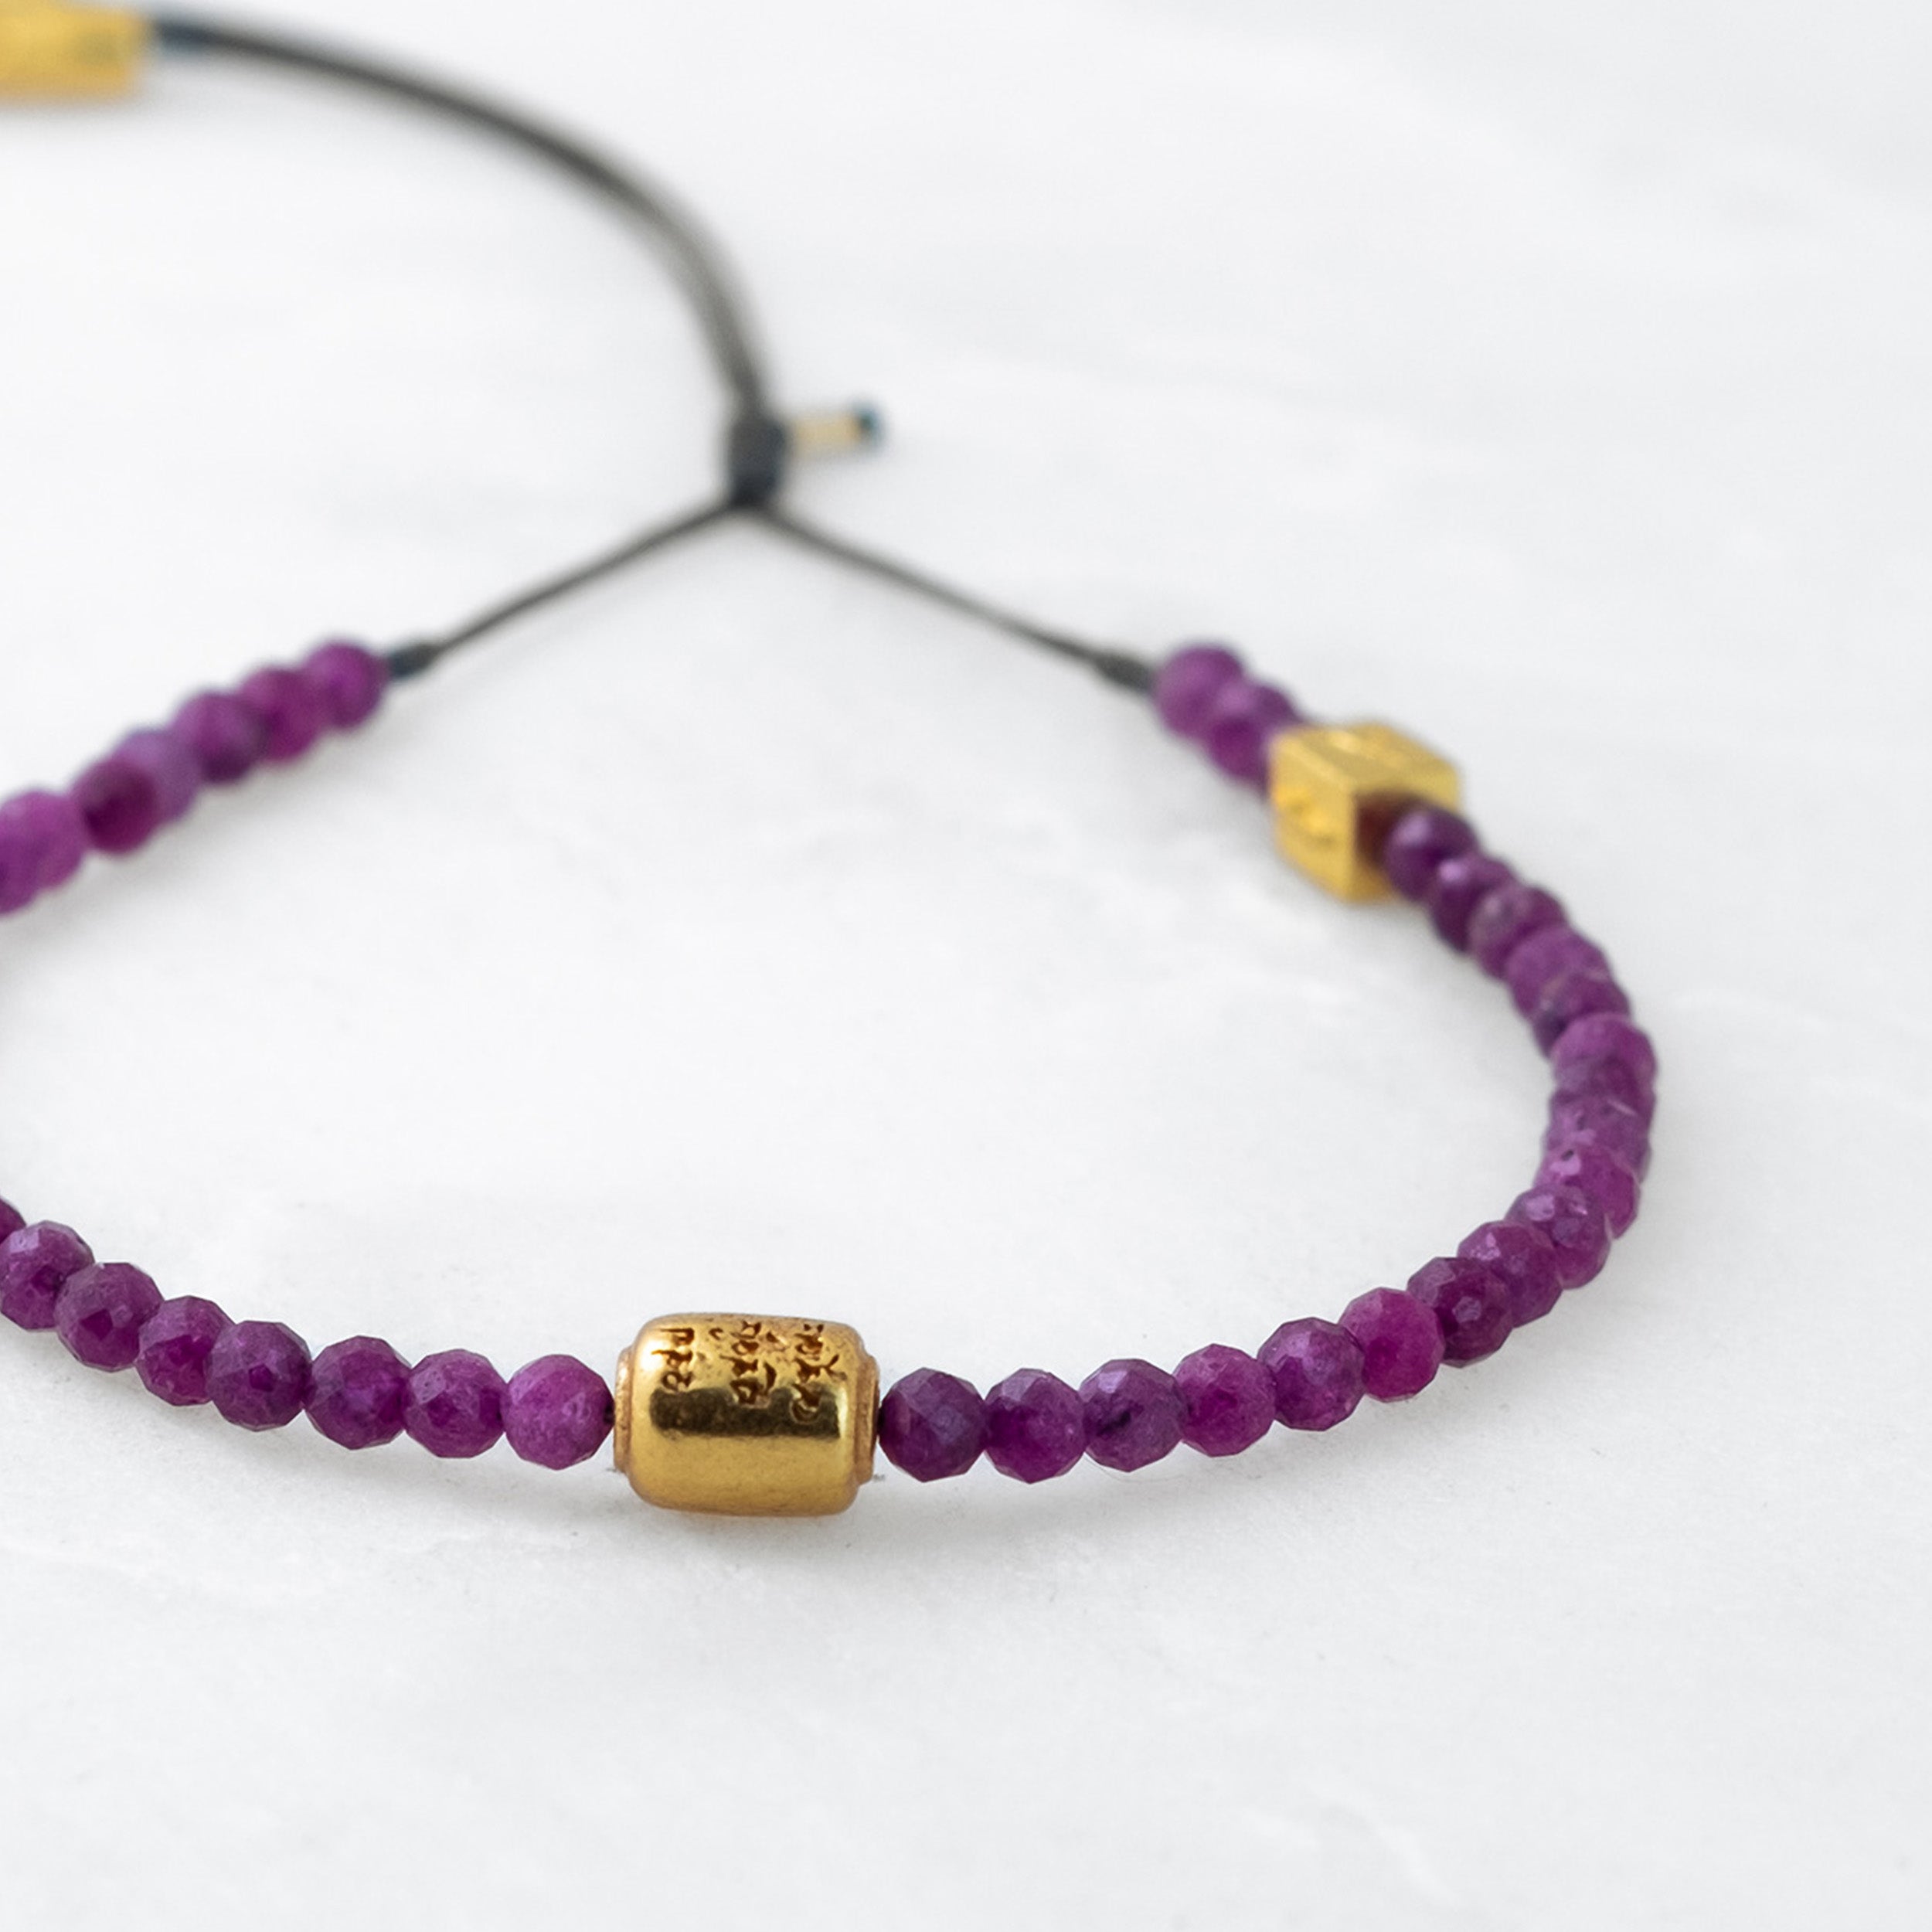 MALA PRECIEUX bracelet - Ruby, golden Manikorlo